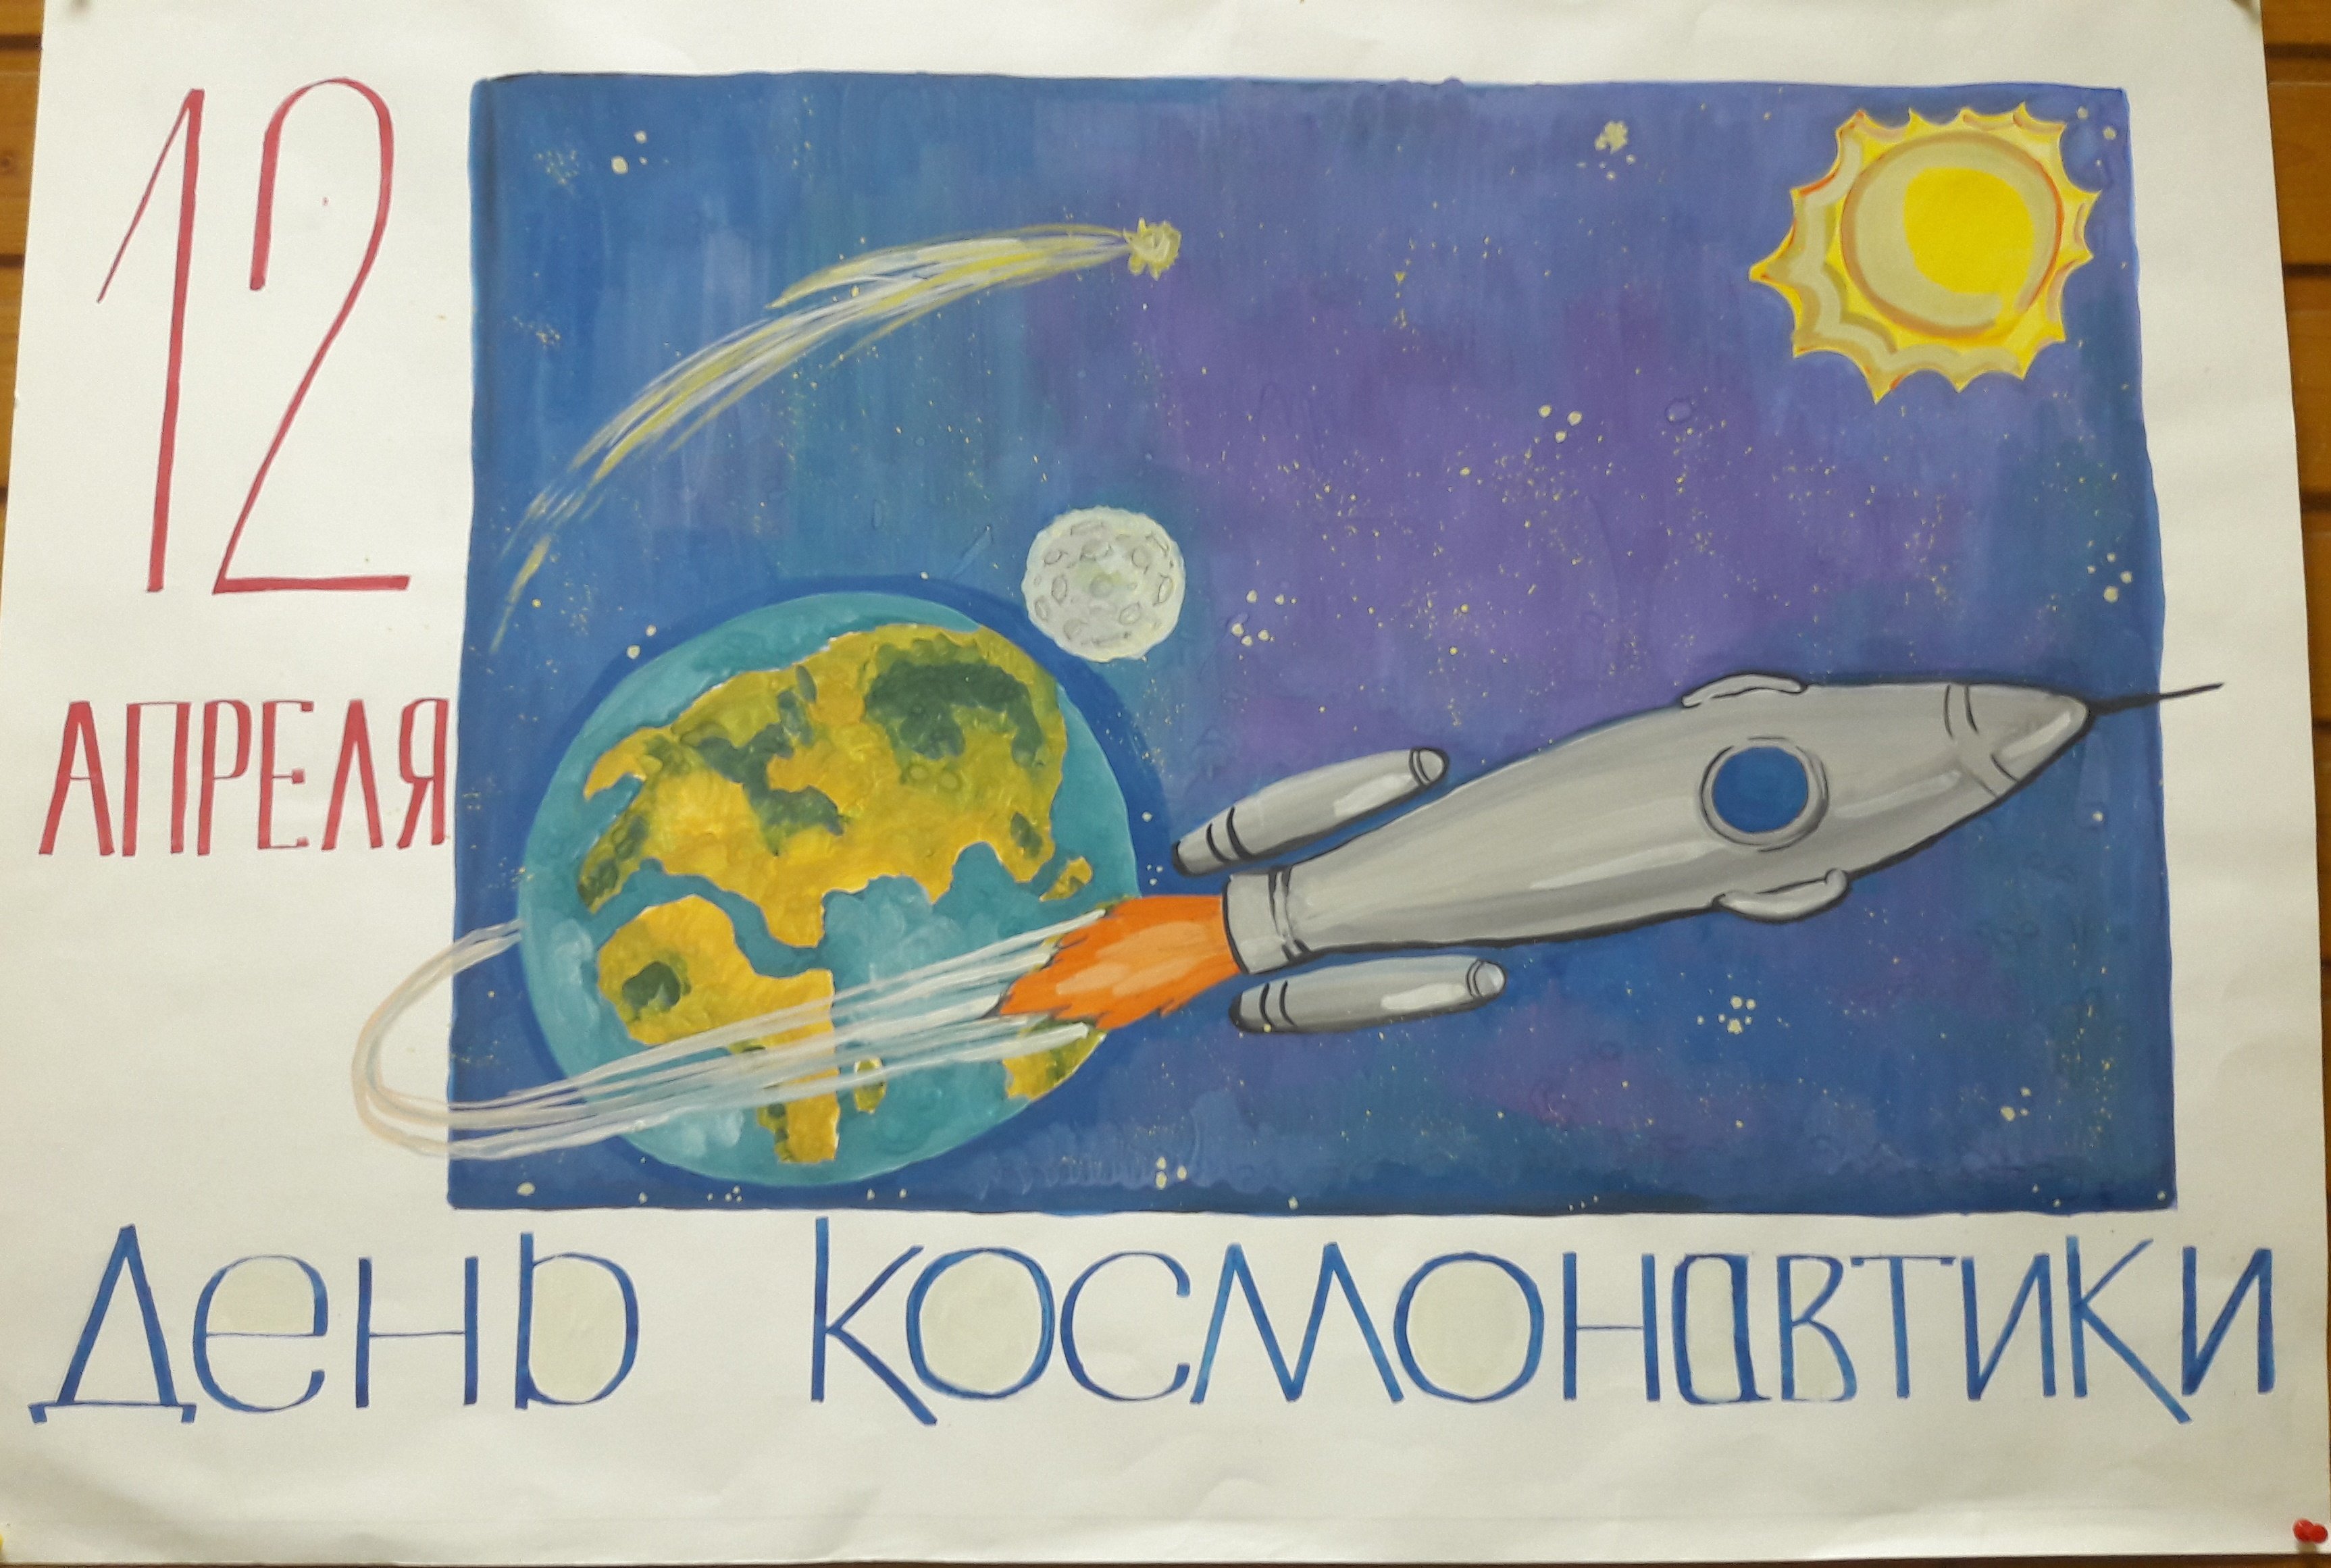 Газета ко дню космонавтики. Плакат "день космонавтики". Плакат на космическую тему. Плакат ко Дню космоса. Плакета на тему космос.